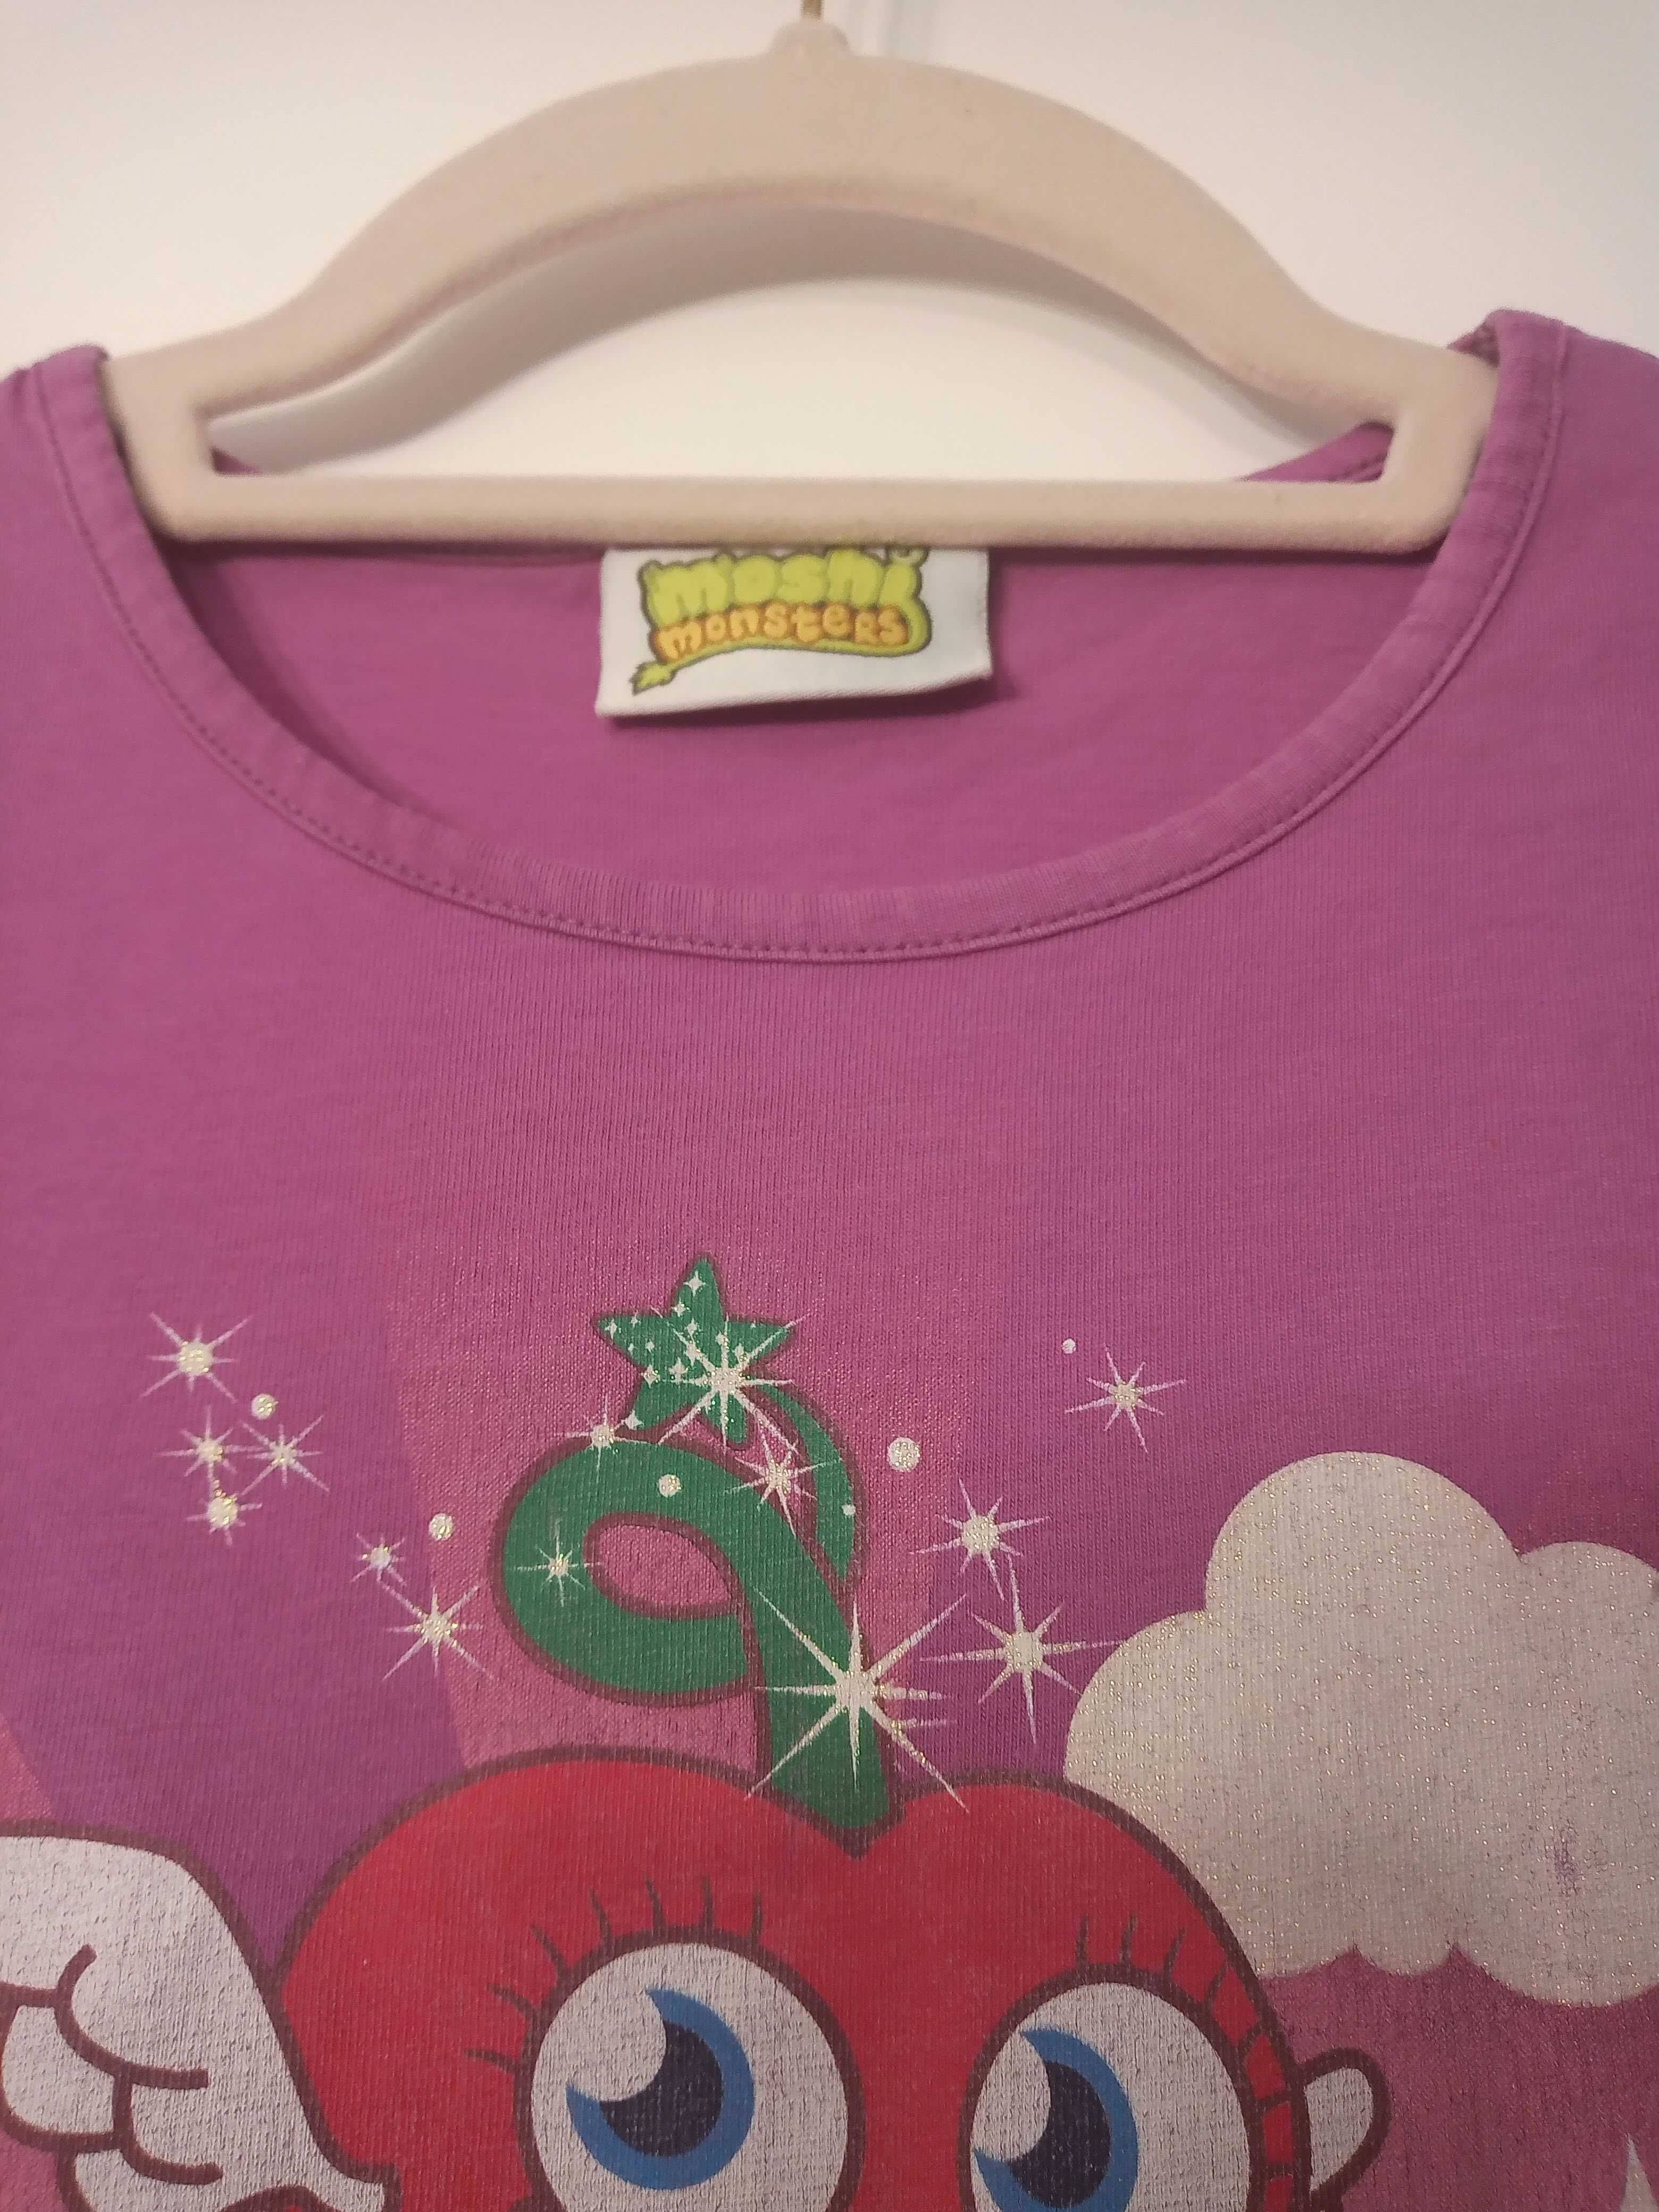 T-shirt Moshi Monsters koszulka 128-134 cm ok.8 lat DOSTAWA 1 zł